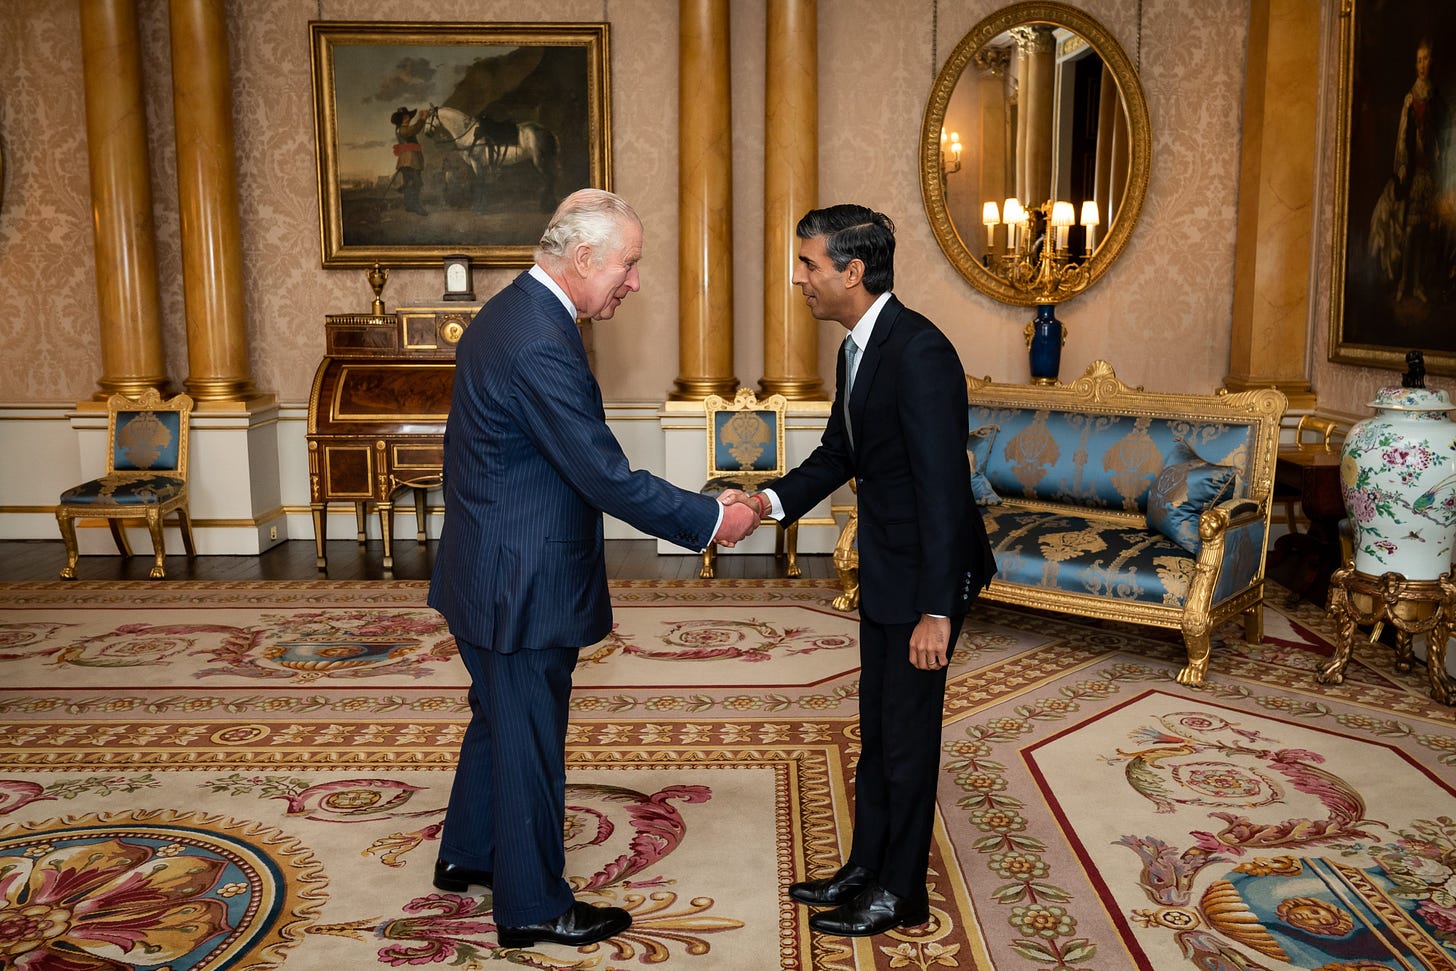 King Charles III receiving Rishi Sunak at Buckingham Palace, London on October 25, 2022 (Image: Twitter/@RoyalFamily)